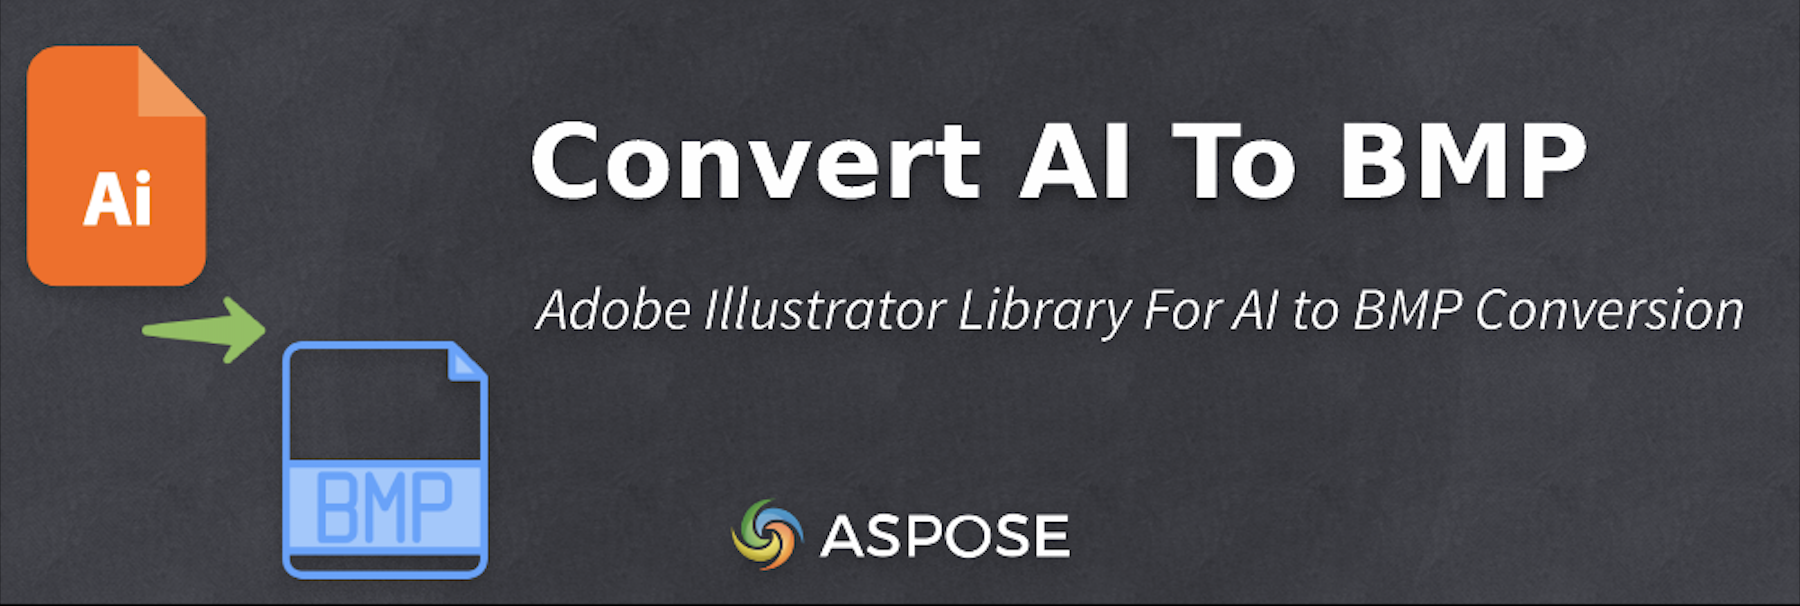 Convertir AI a BMP en Java - Biblioteca de Adobe Illustrator